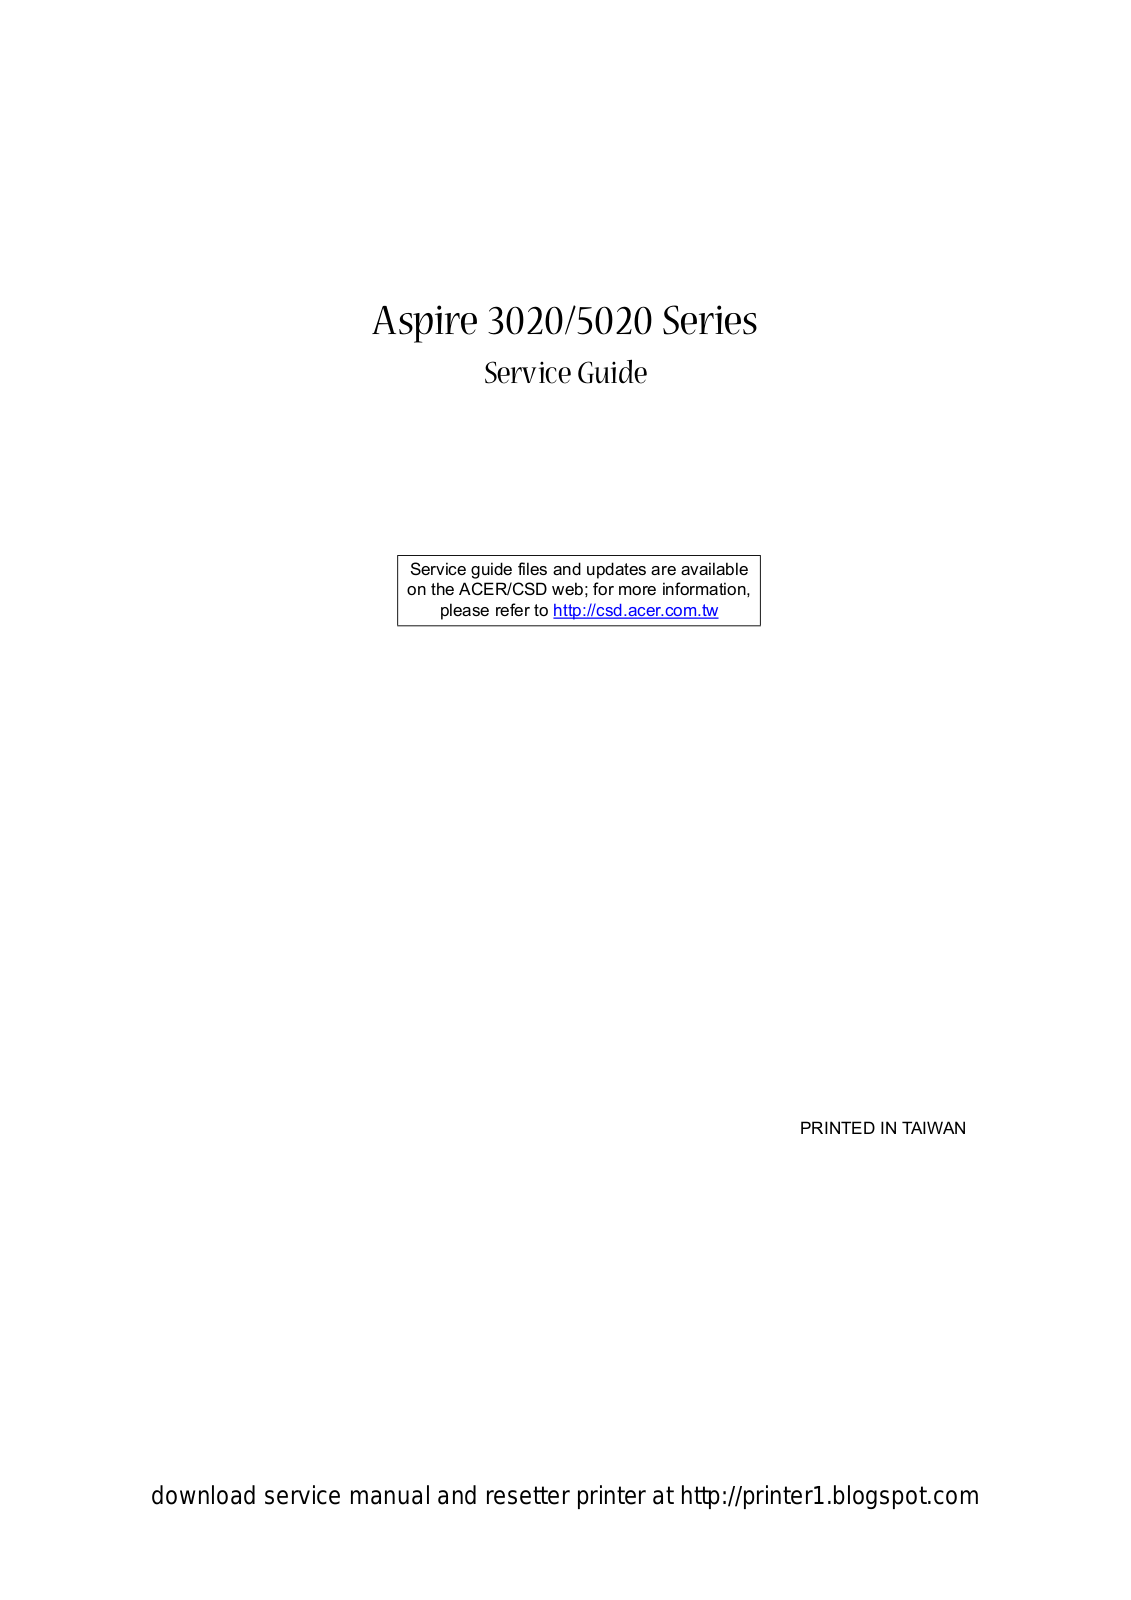 Acer Aspire 3020 series, Aspire 5020 series Service Manual